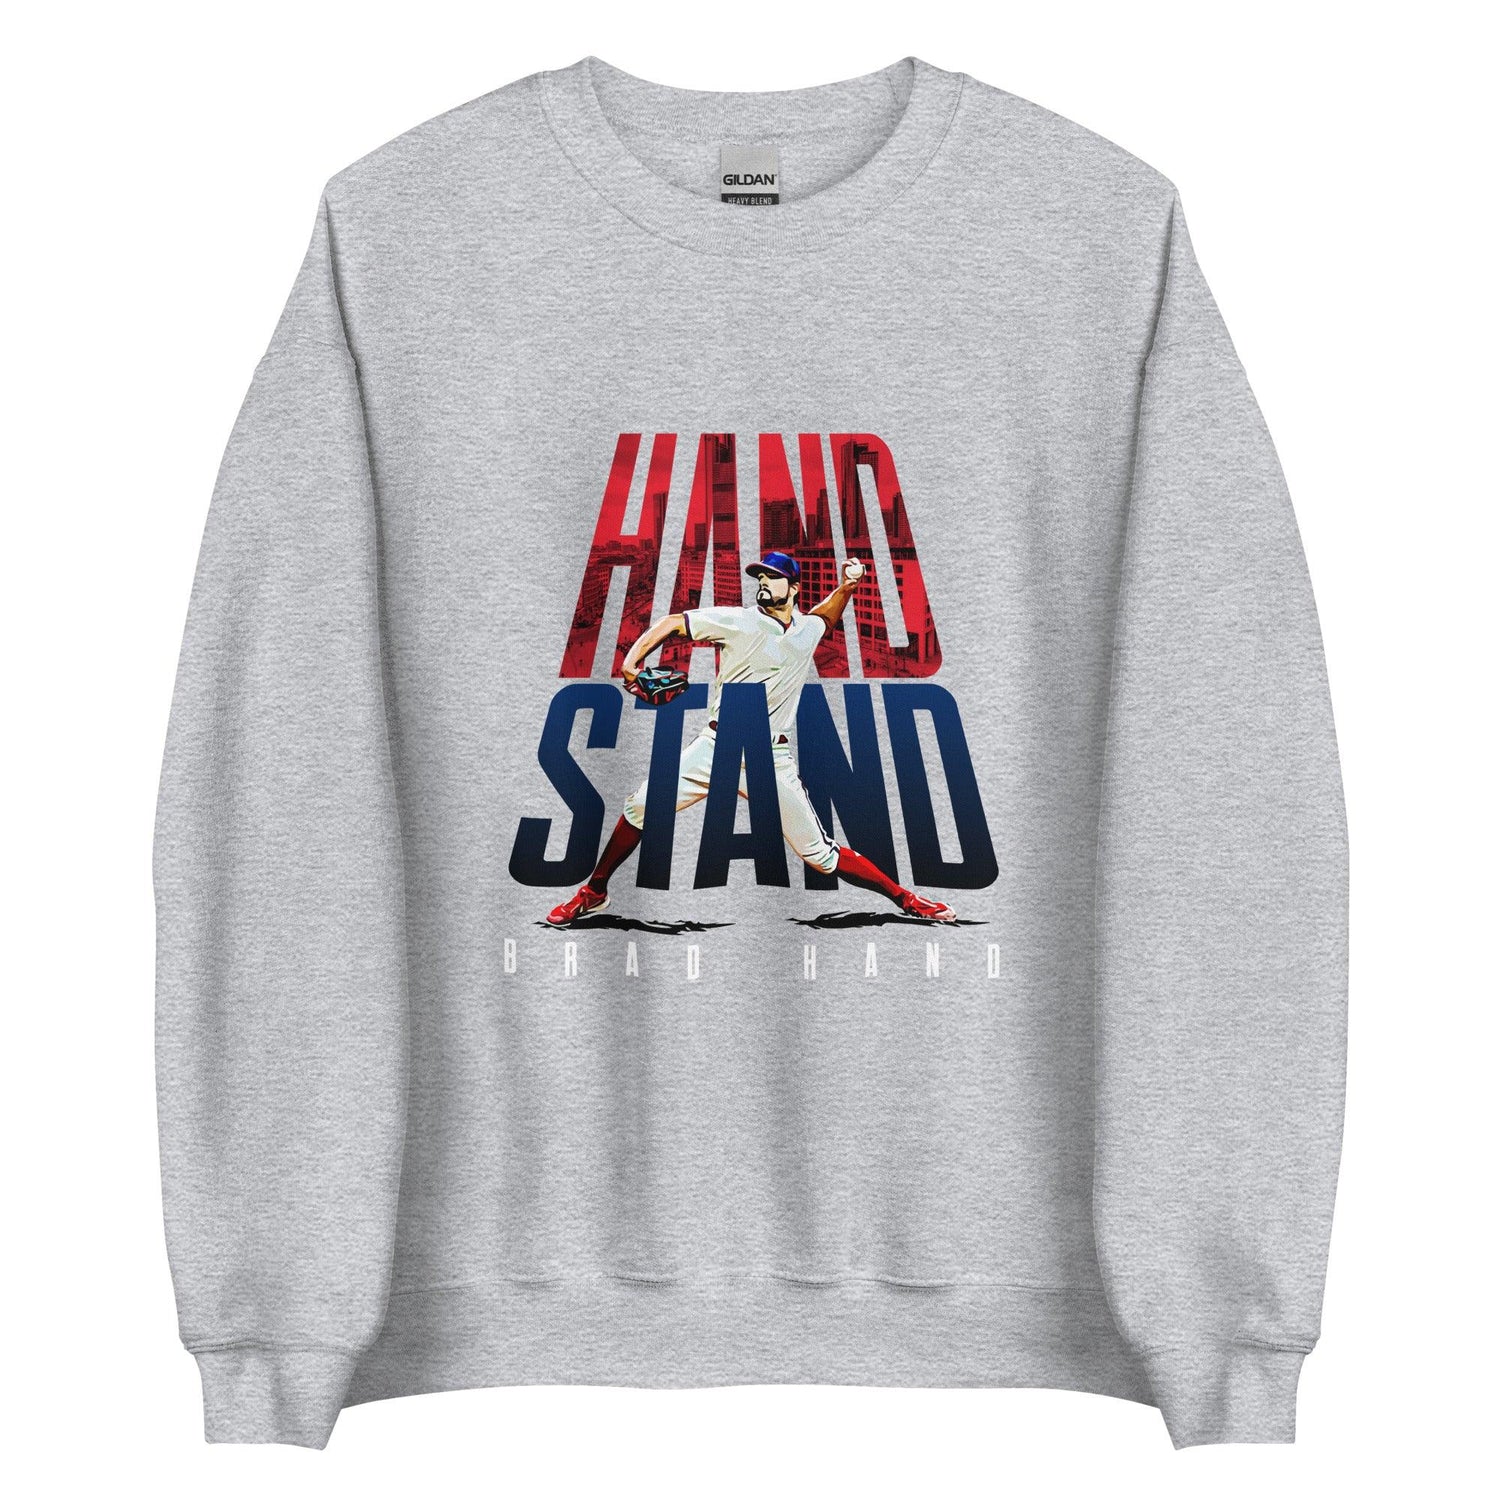 Brad Hand "Hand Stand" Sweatshirt - Fan Arch